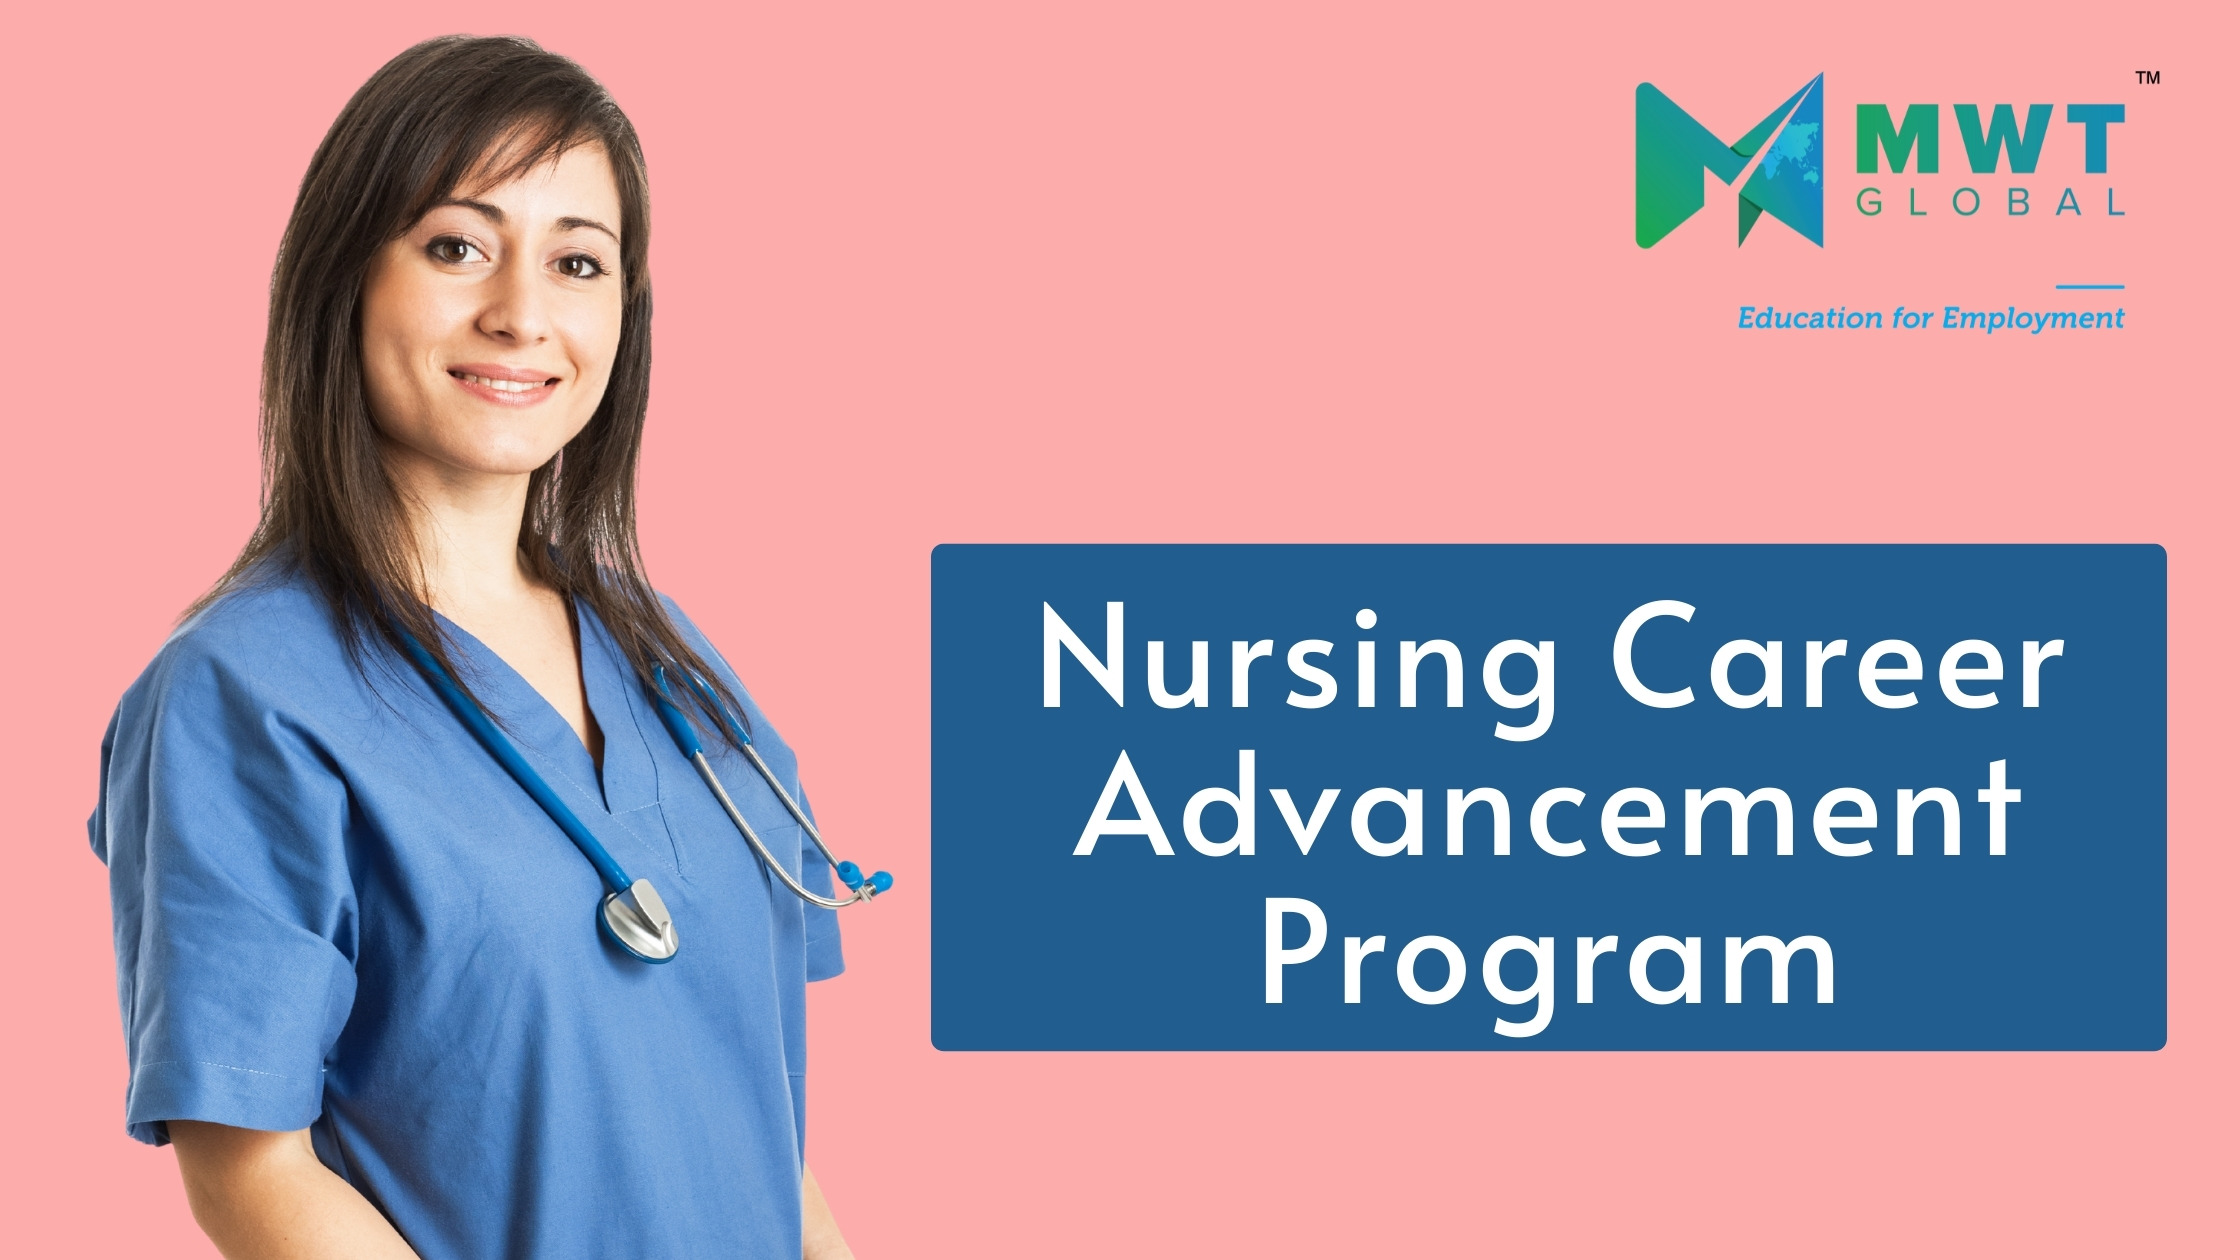 All about the Nursing Career Advancement Program